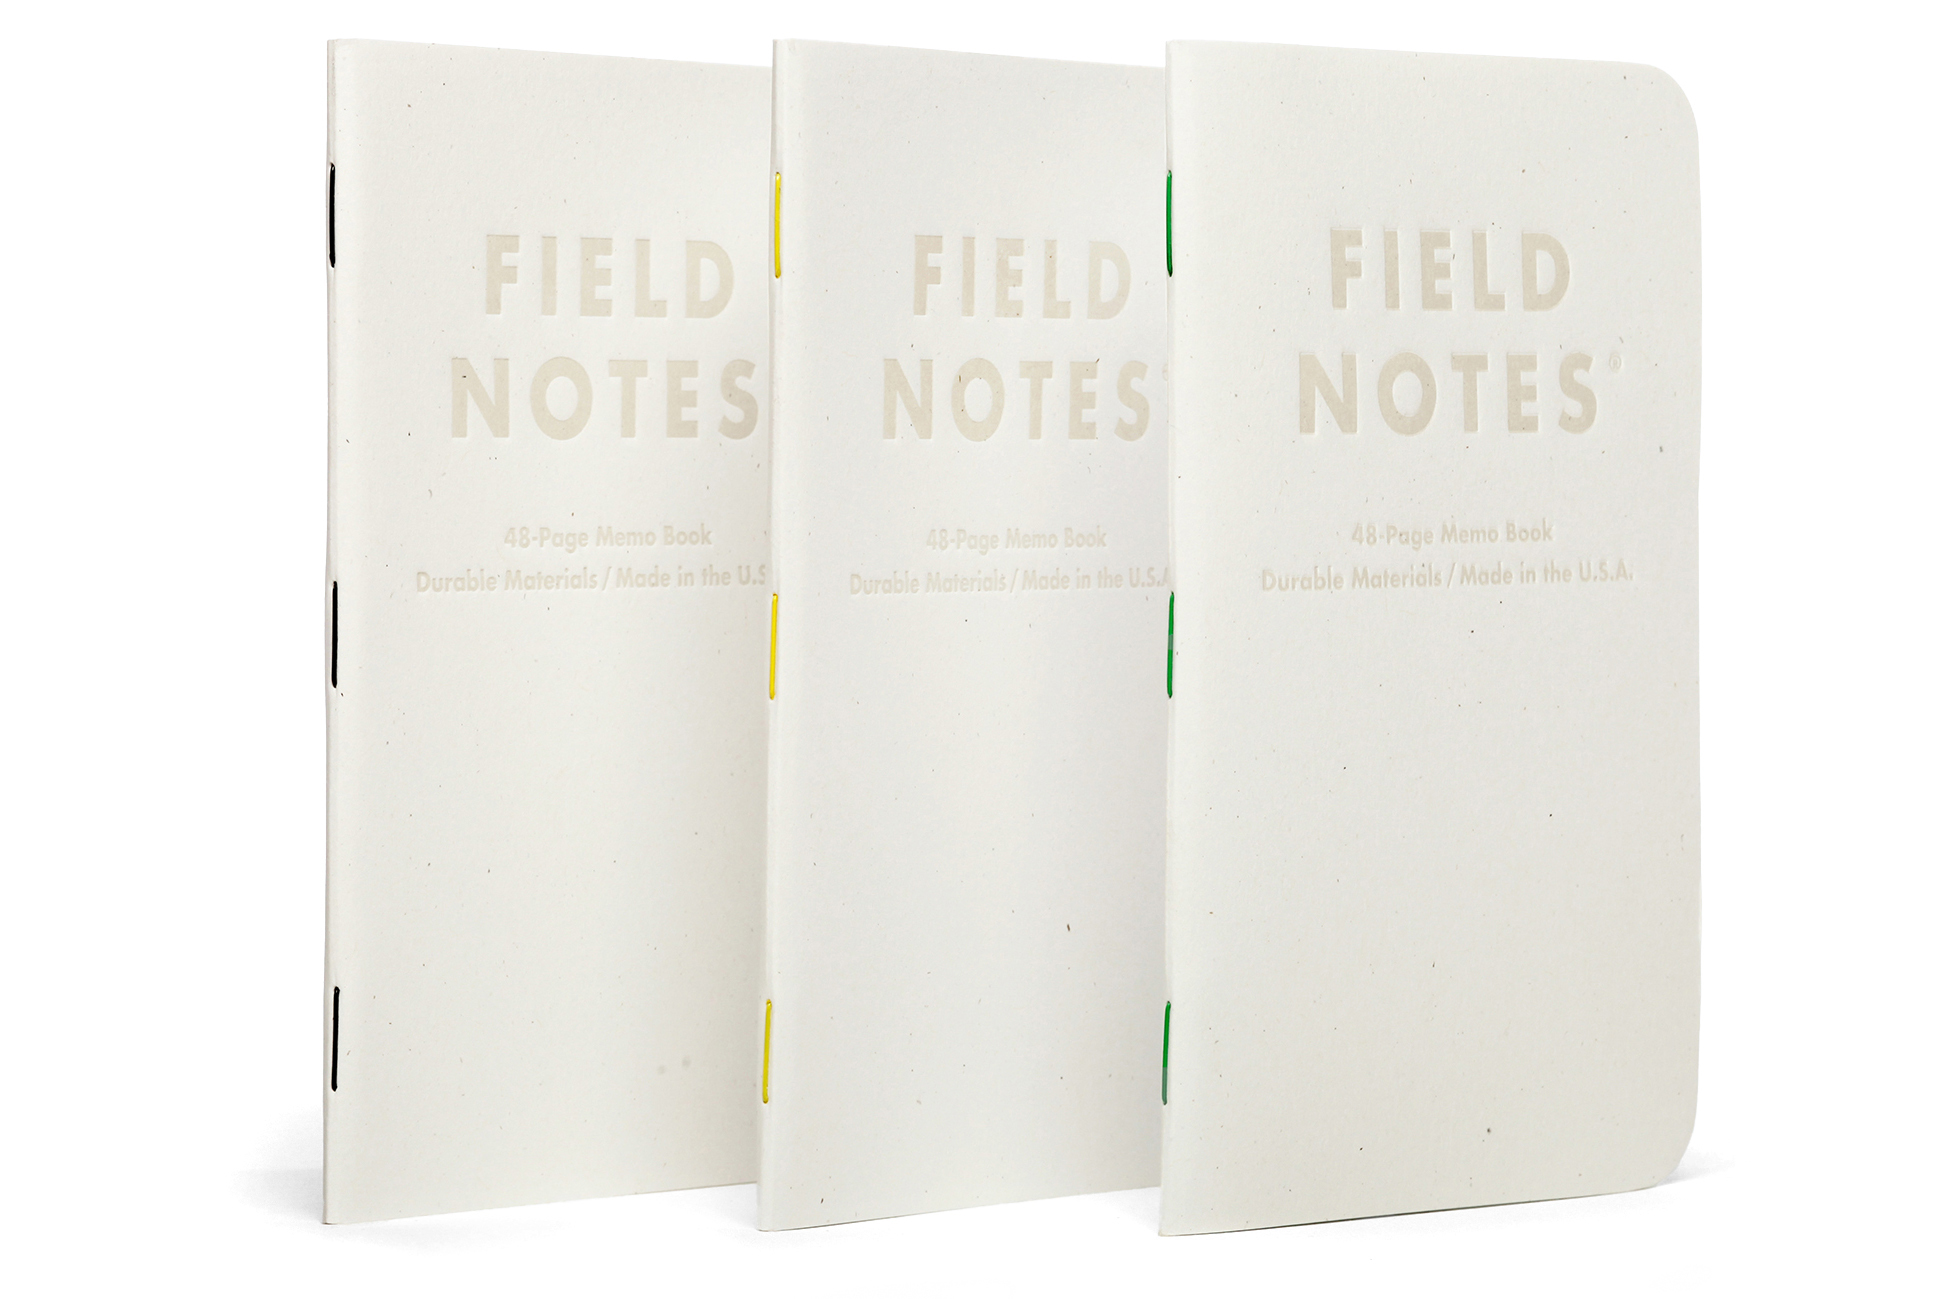 Field Notes - Birch Bark - 3 Pack